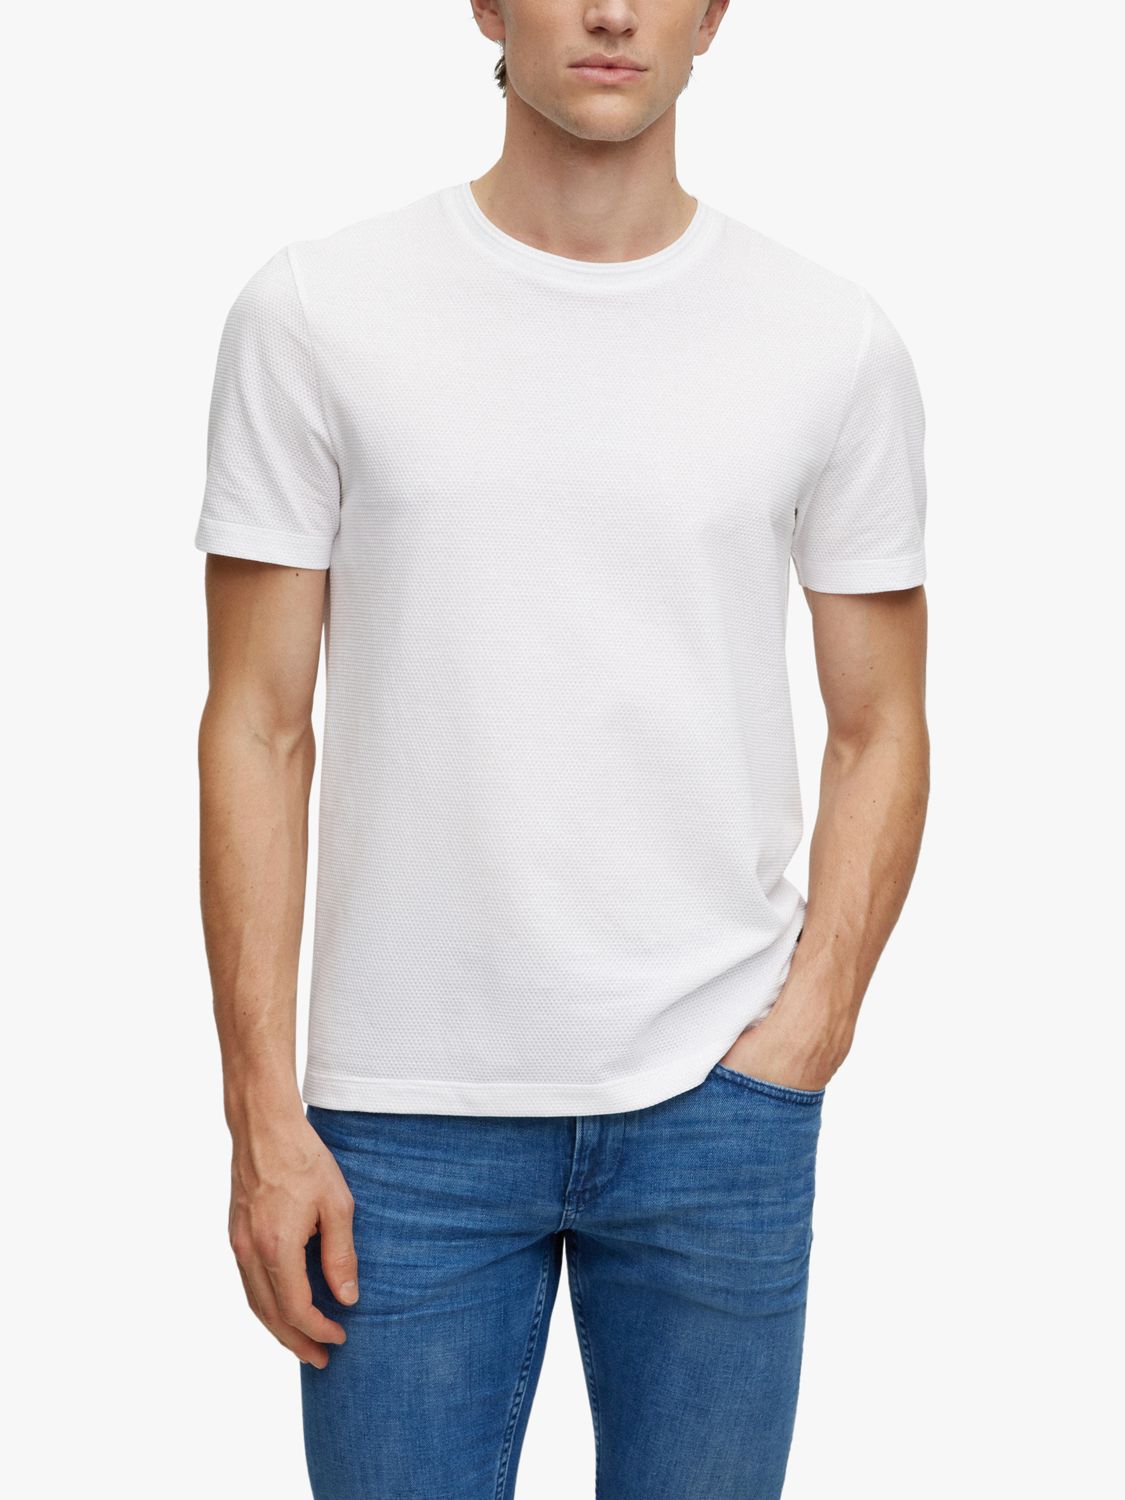 HUGO BOSS Tiburt 240 T-shirt, White at John Lewis & Partners